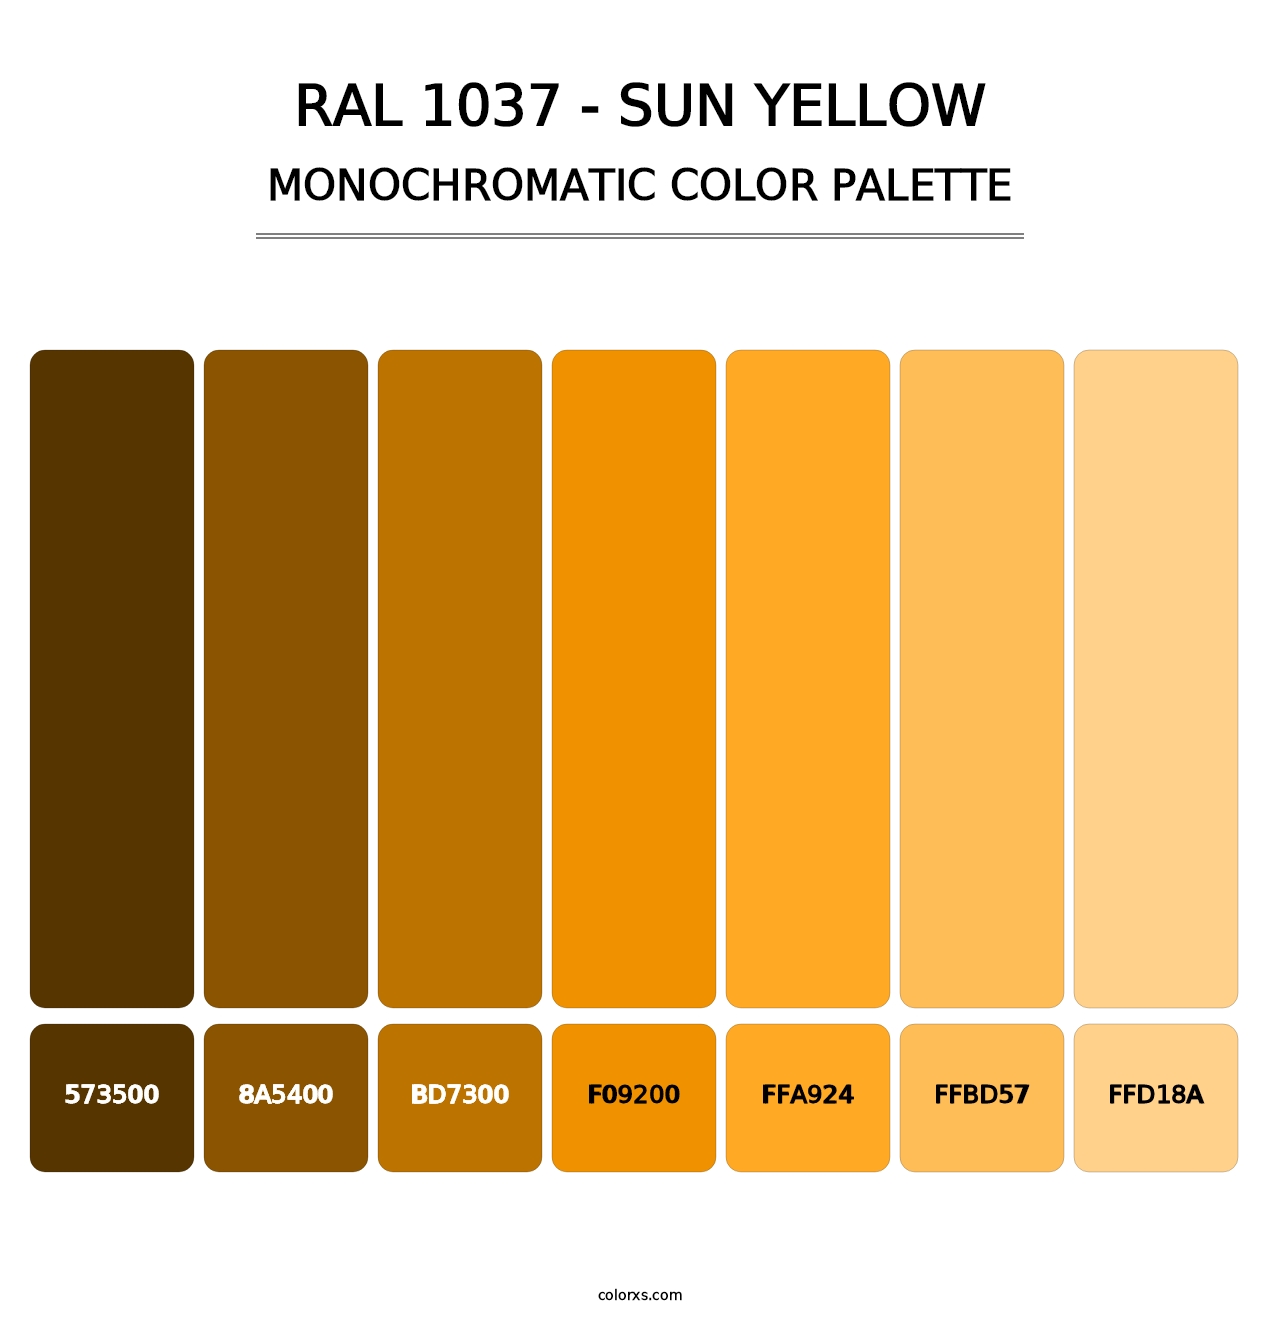 RAL 1037 - Sun Yellow - Monochromatic Color Palette